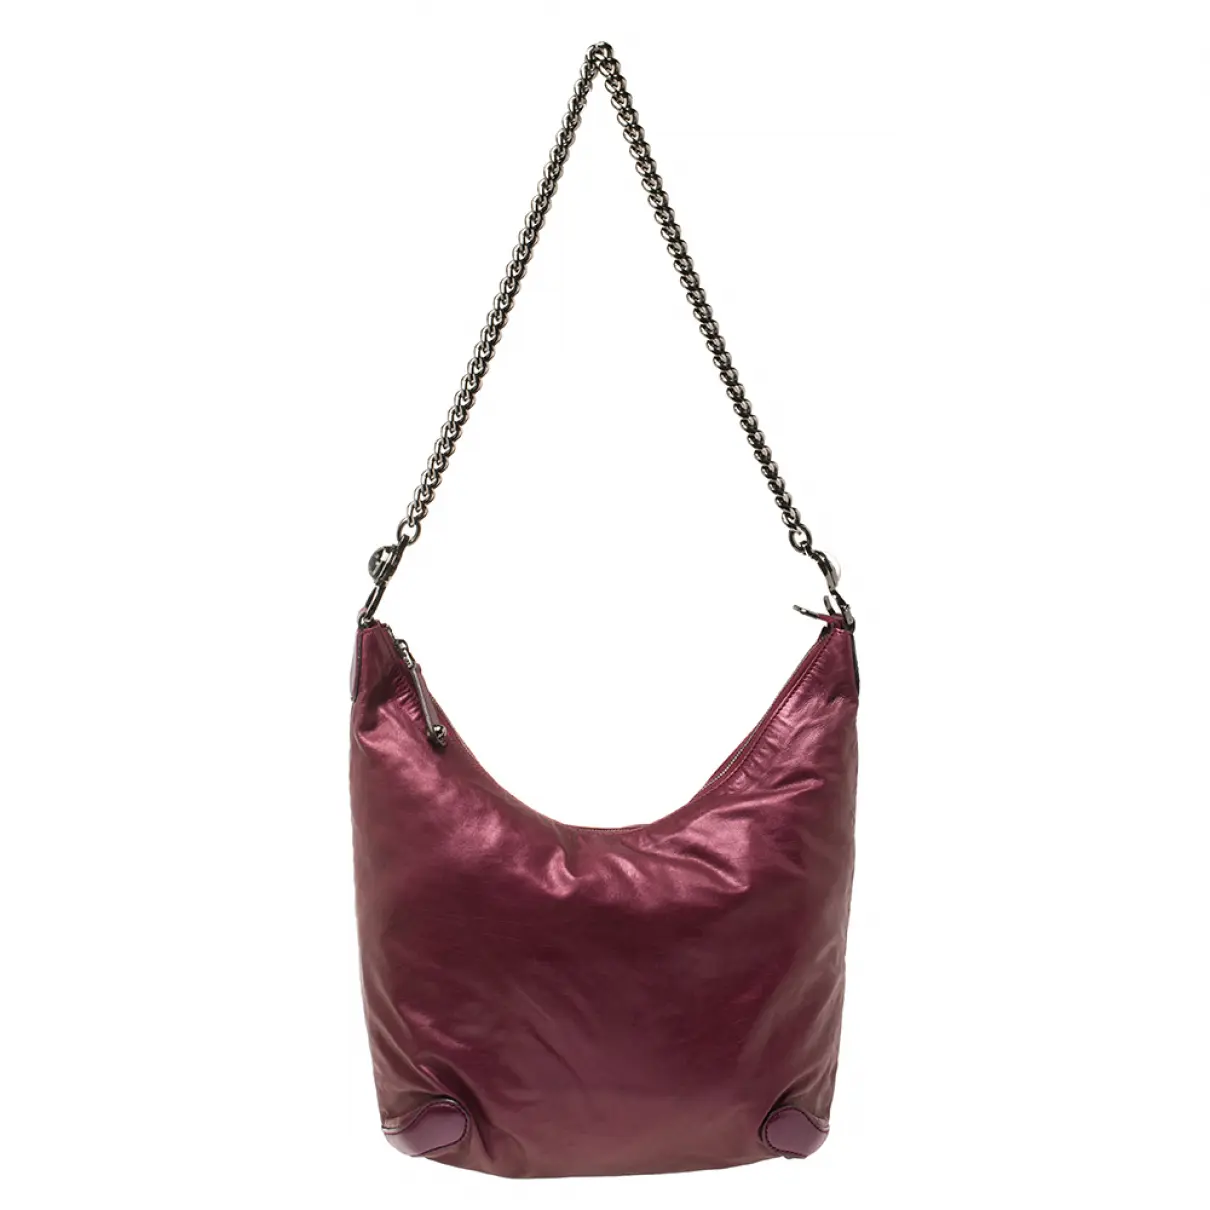 Leather handbag Gucci